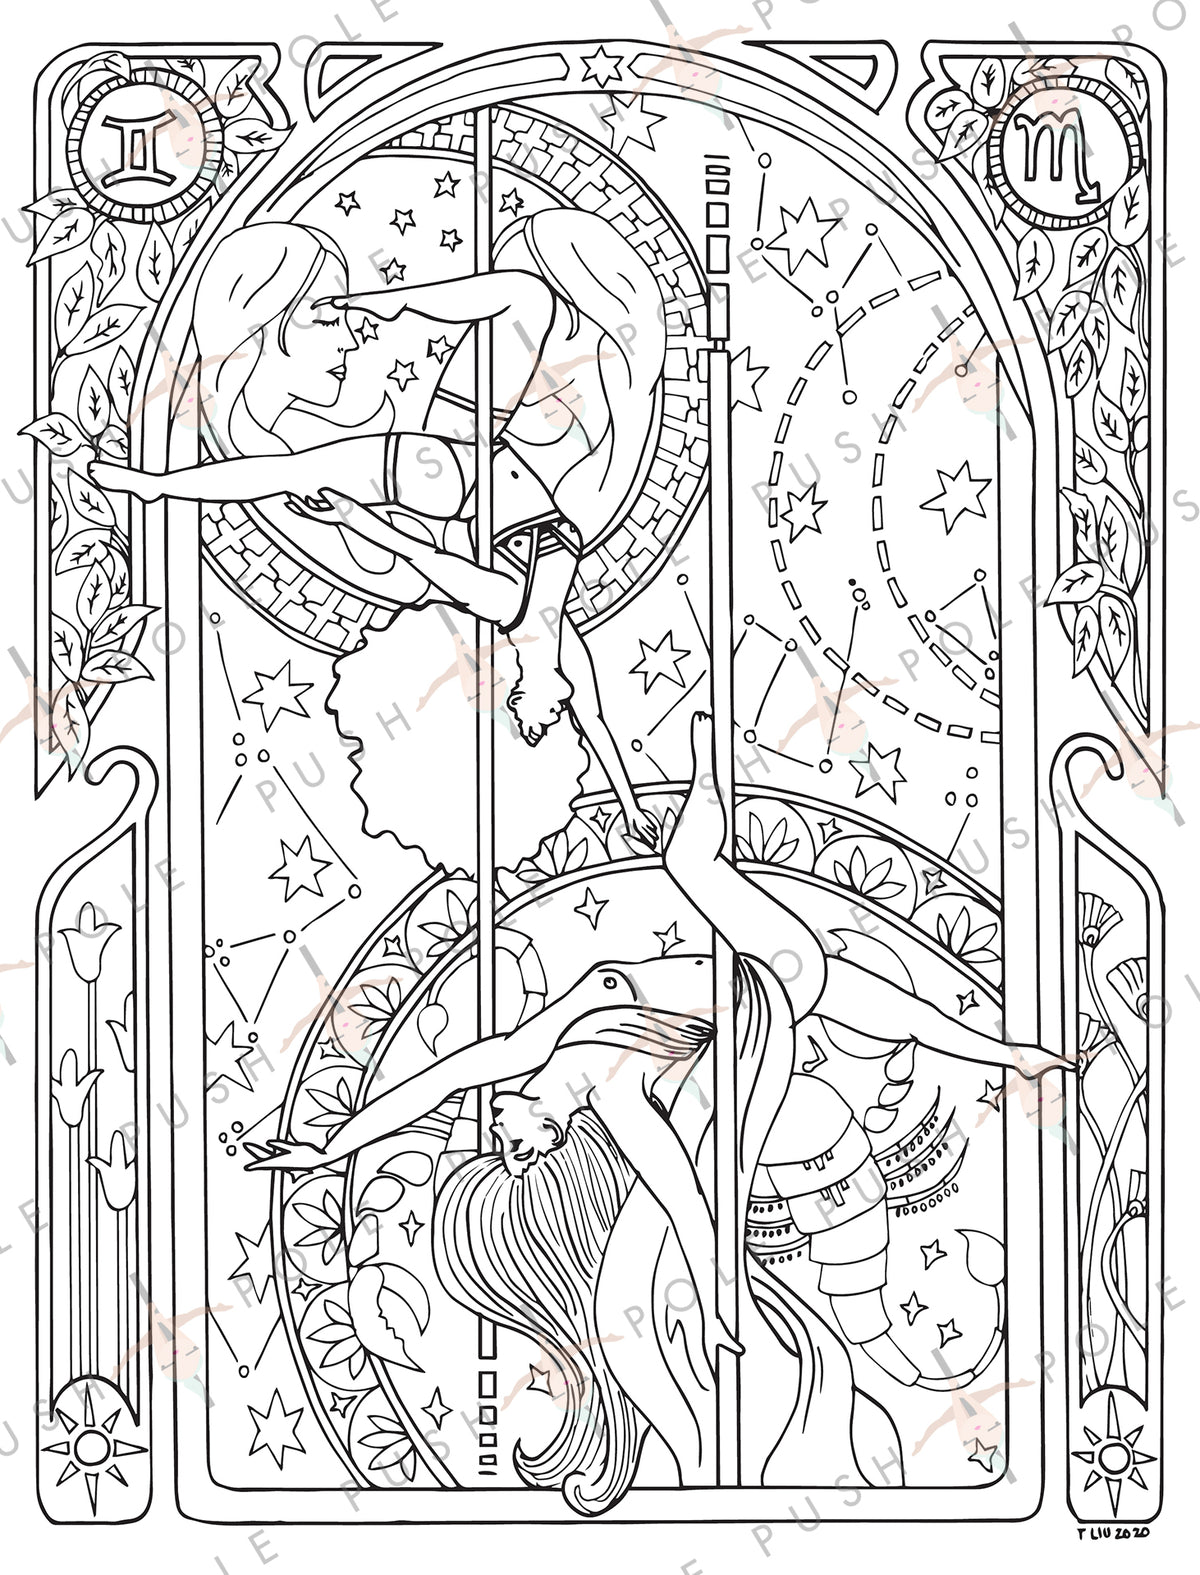 Scorpio & Gemini Pole Dance Digital Coloring Page 8.5" x 11"